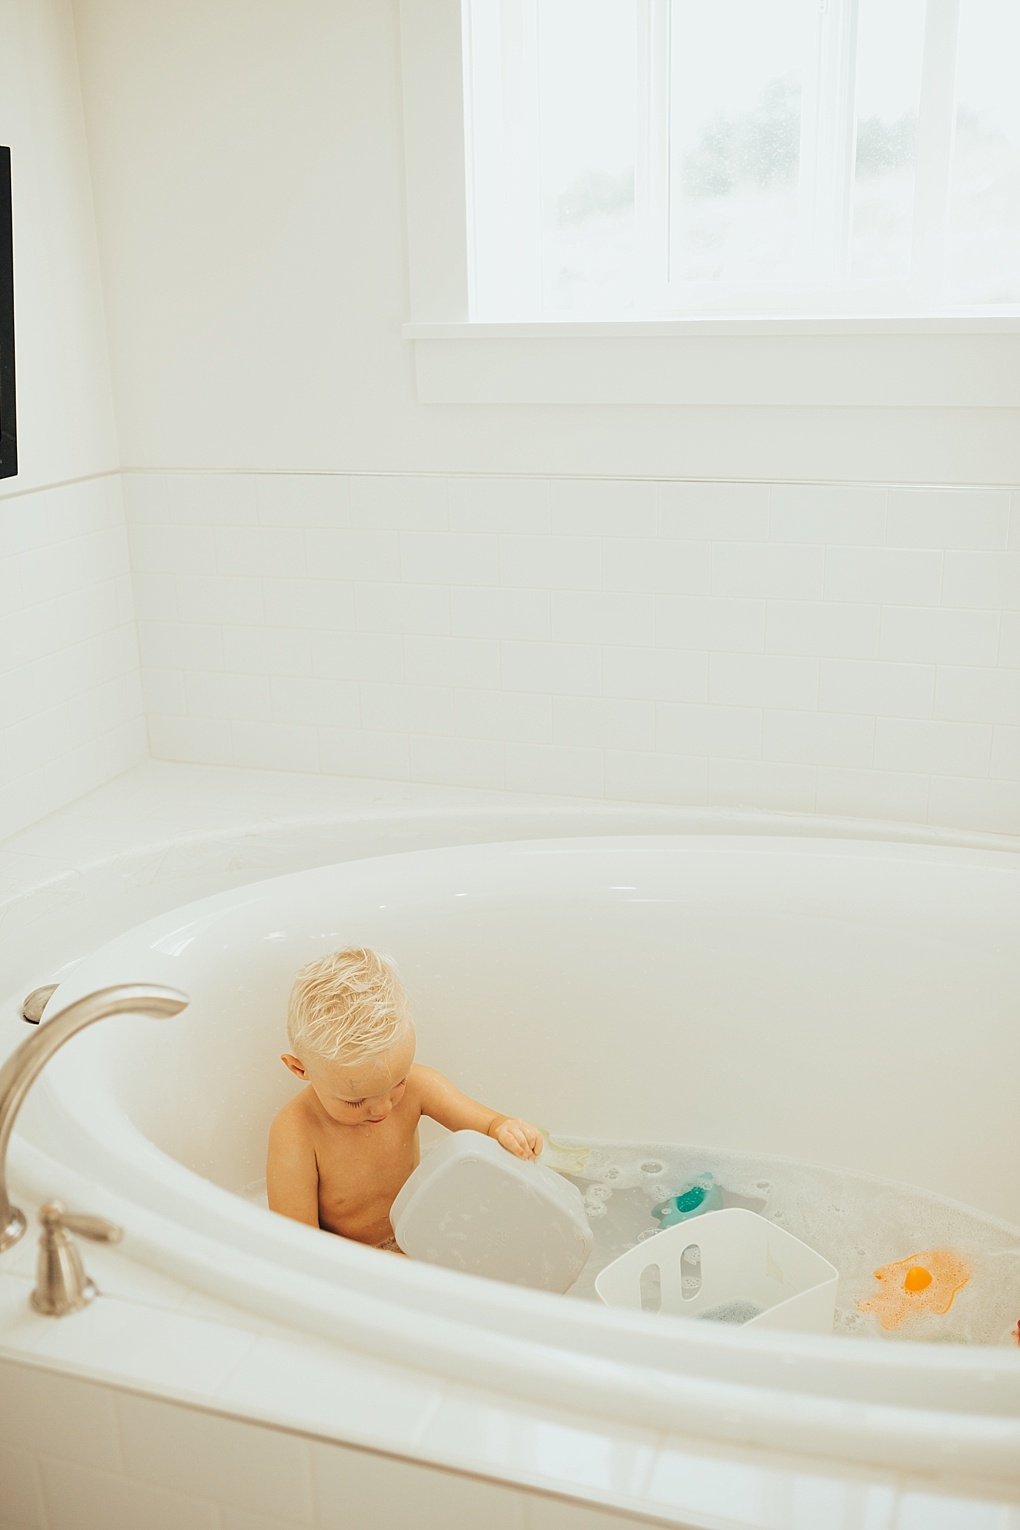 The Best Bath Toys for Kids by Utah mom blogger Dani Marie